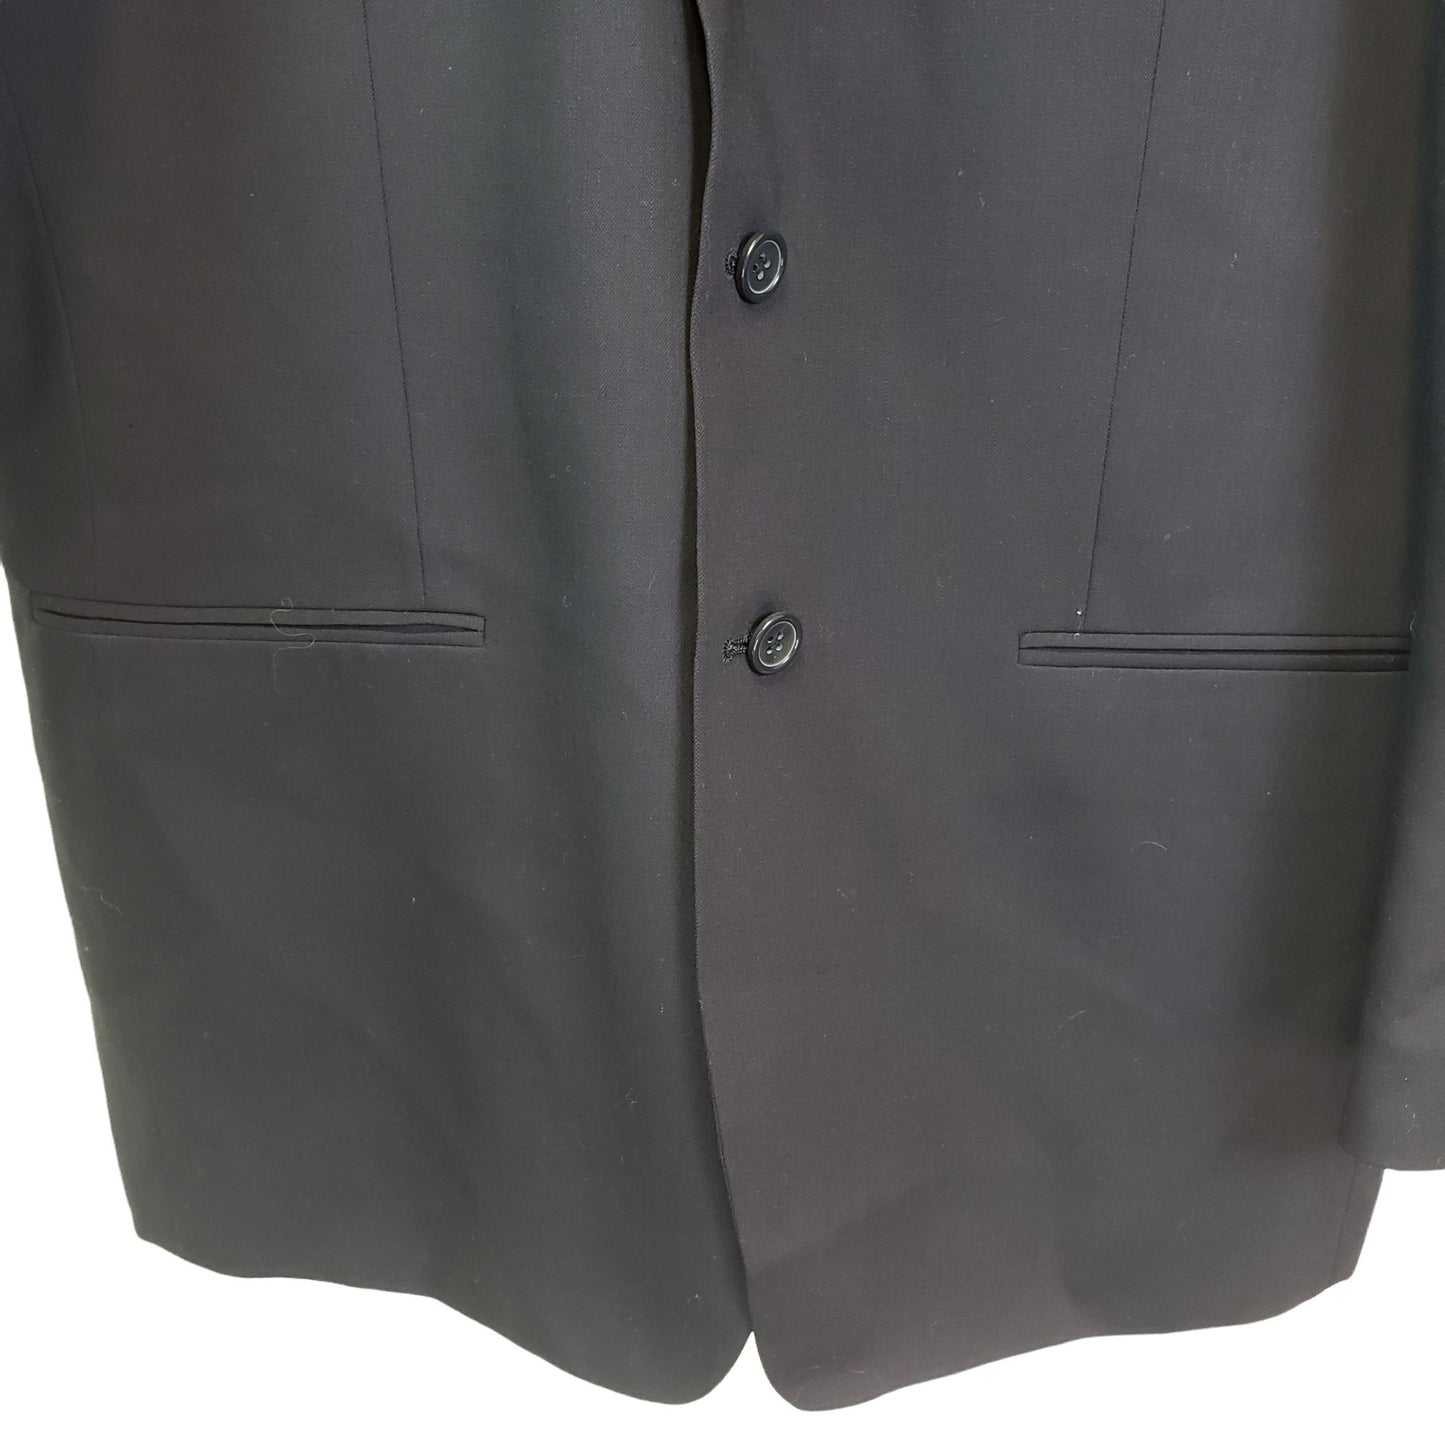 Mantoni 100% Wool 3 Button Jacket Blazer